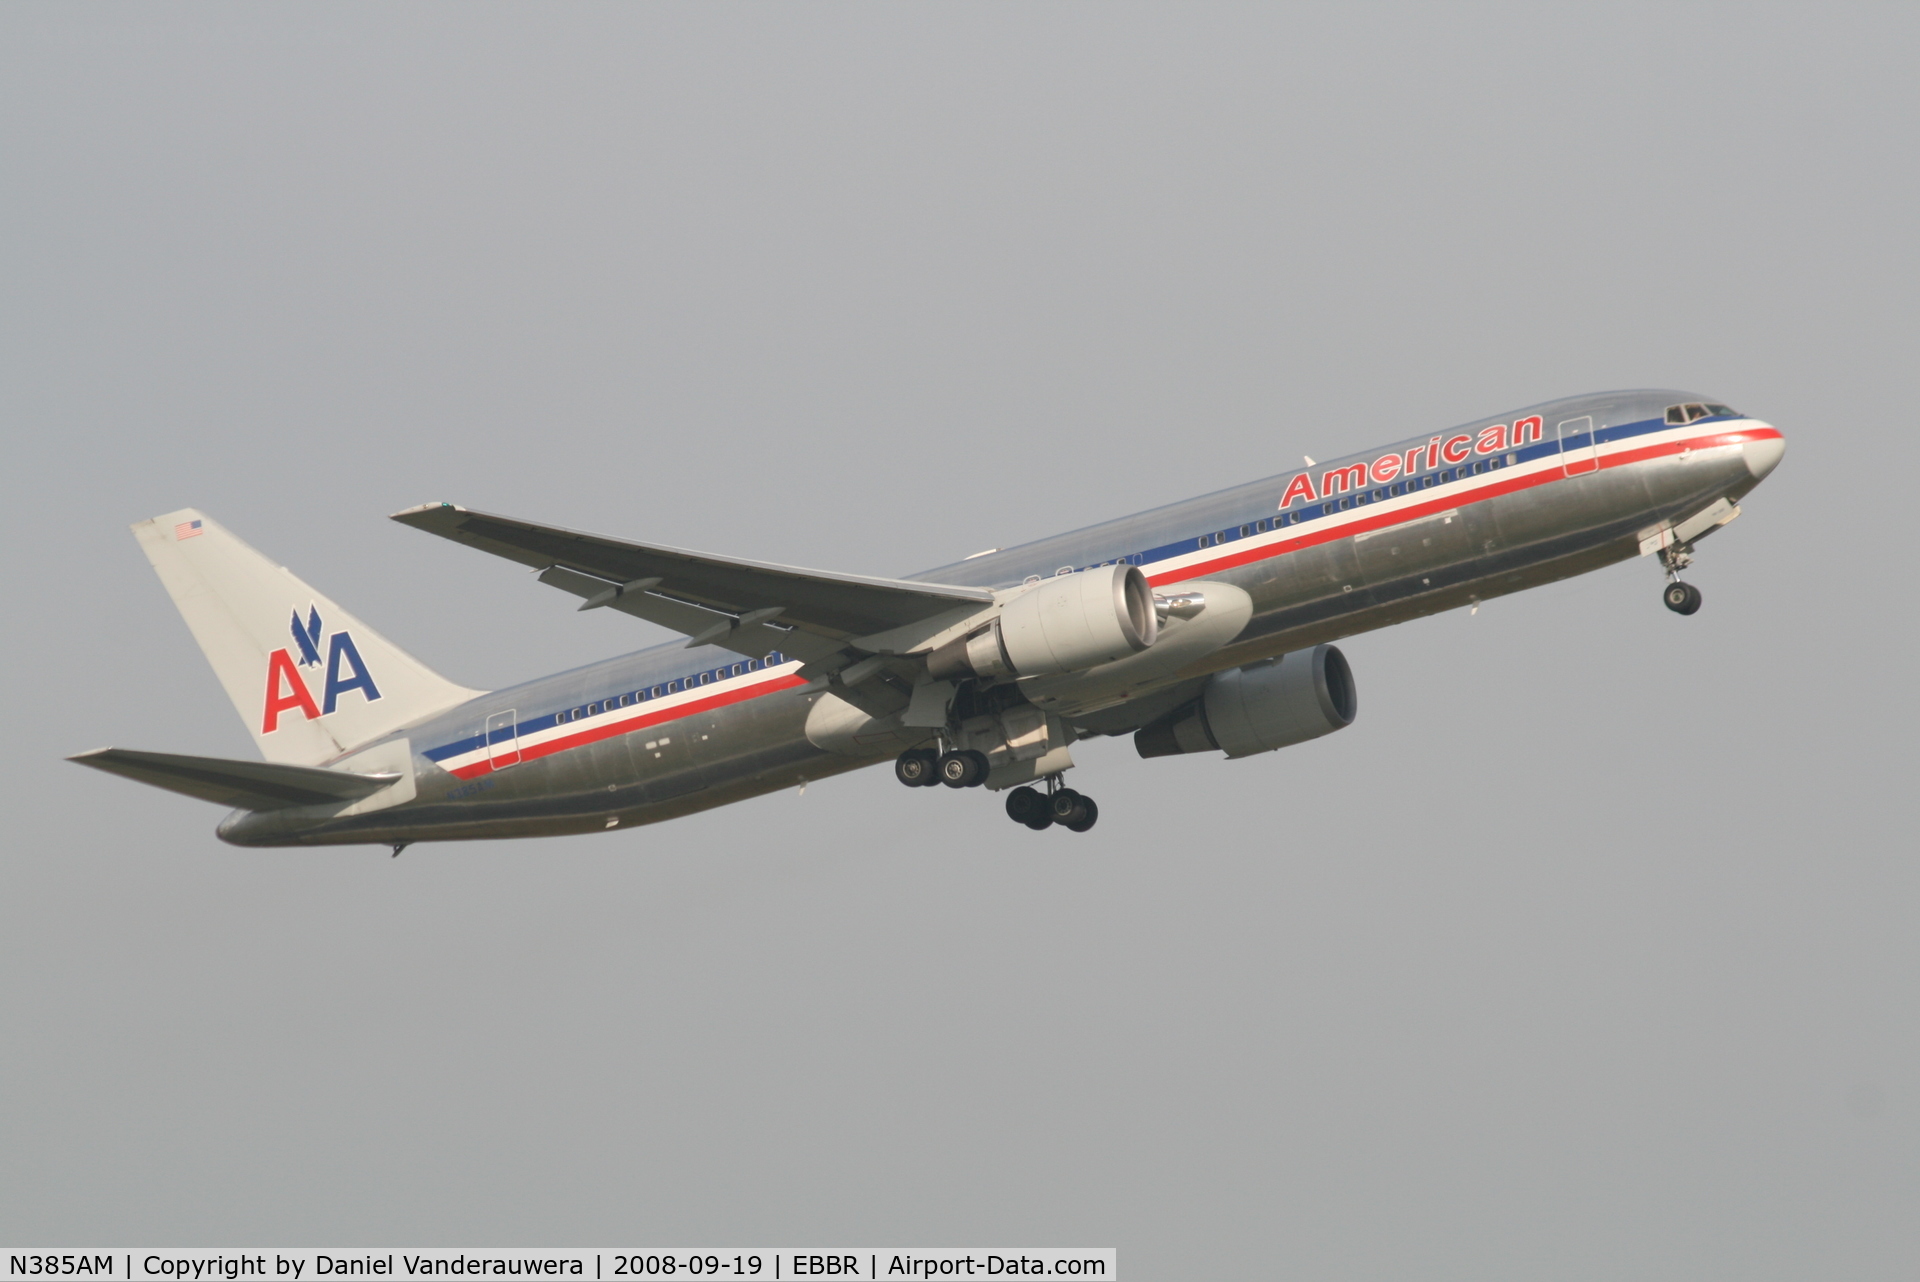 N385AM, 1994 Boeing 767-323 C/N 27059, Flight AA171 is taking off from RWY 07R